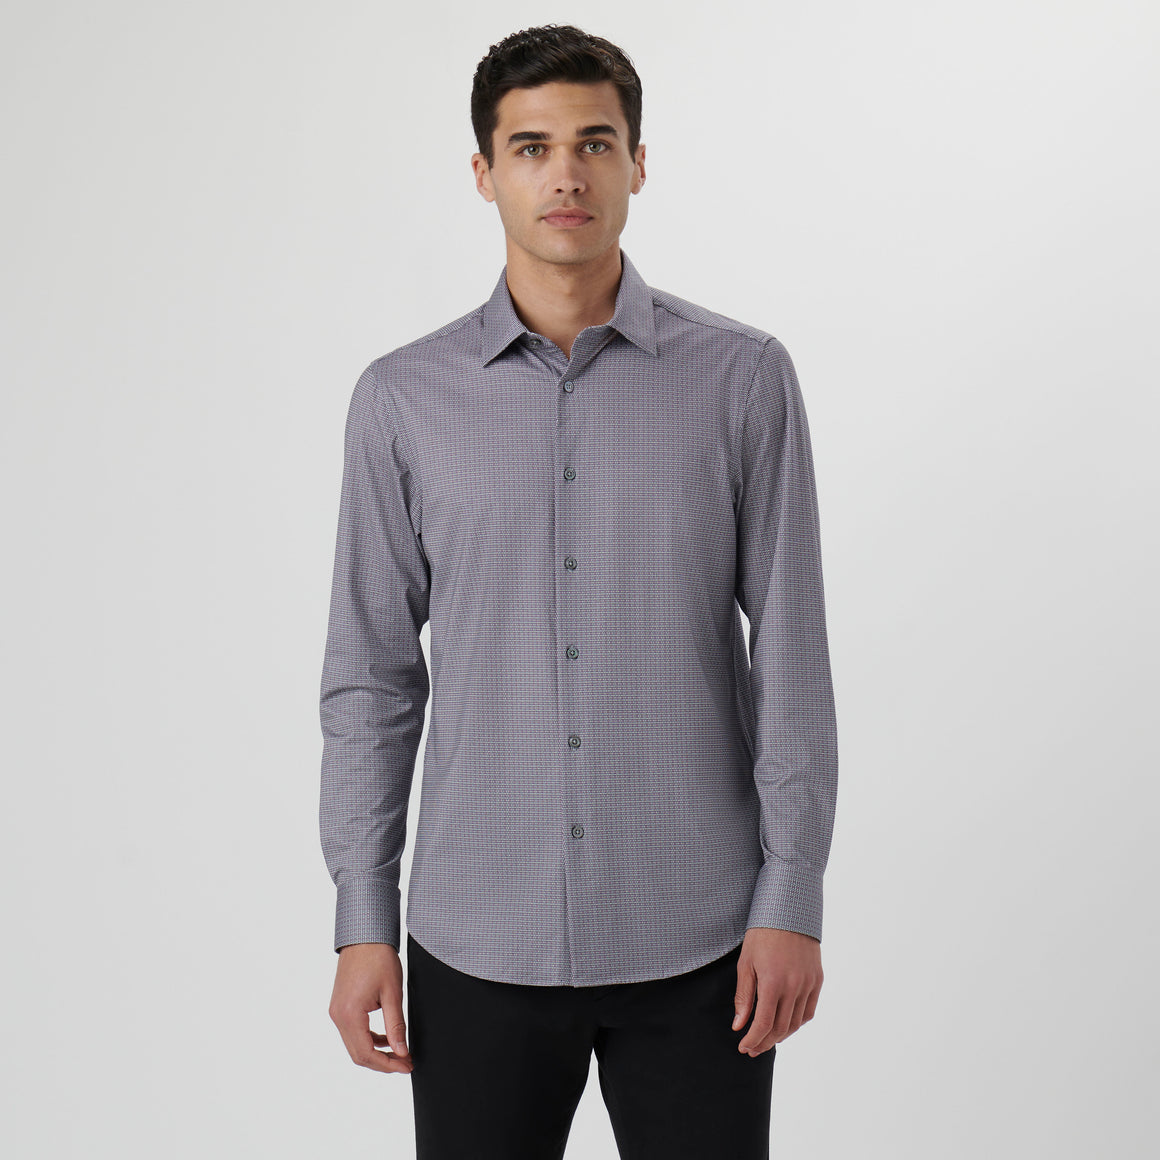 OOOHCotton James Long Sleeve Shirt Geometric Zinc